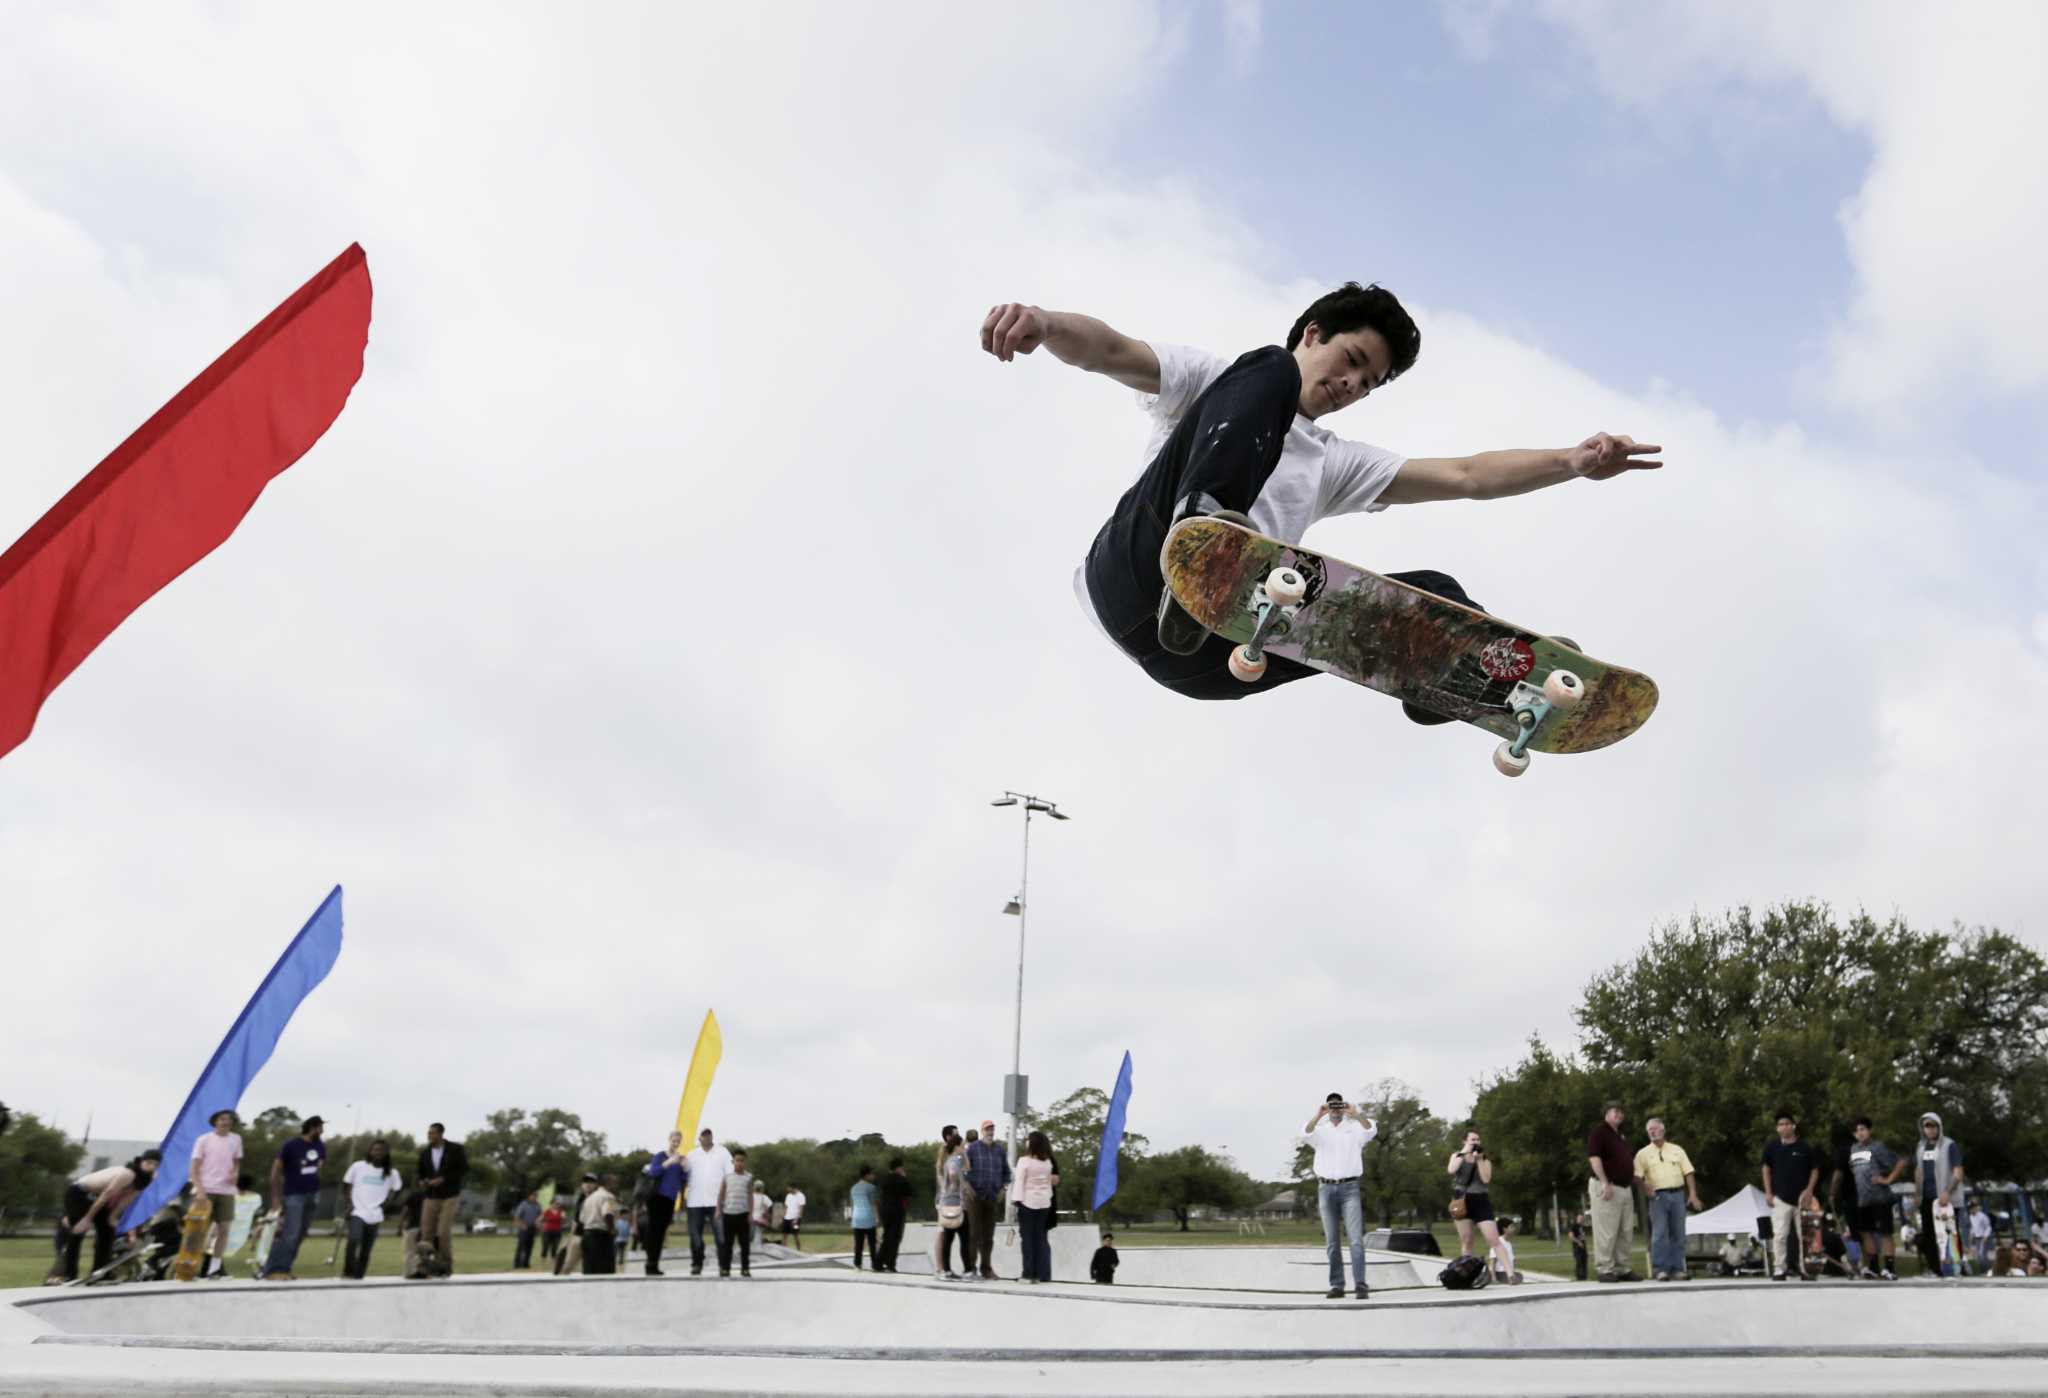 Gulfton-area teens see dreams of skateboard park fulfilled - Houston Chronicle